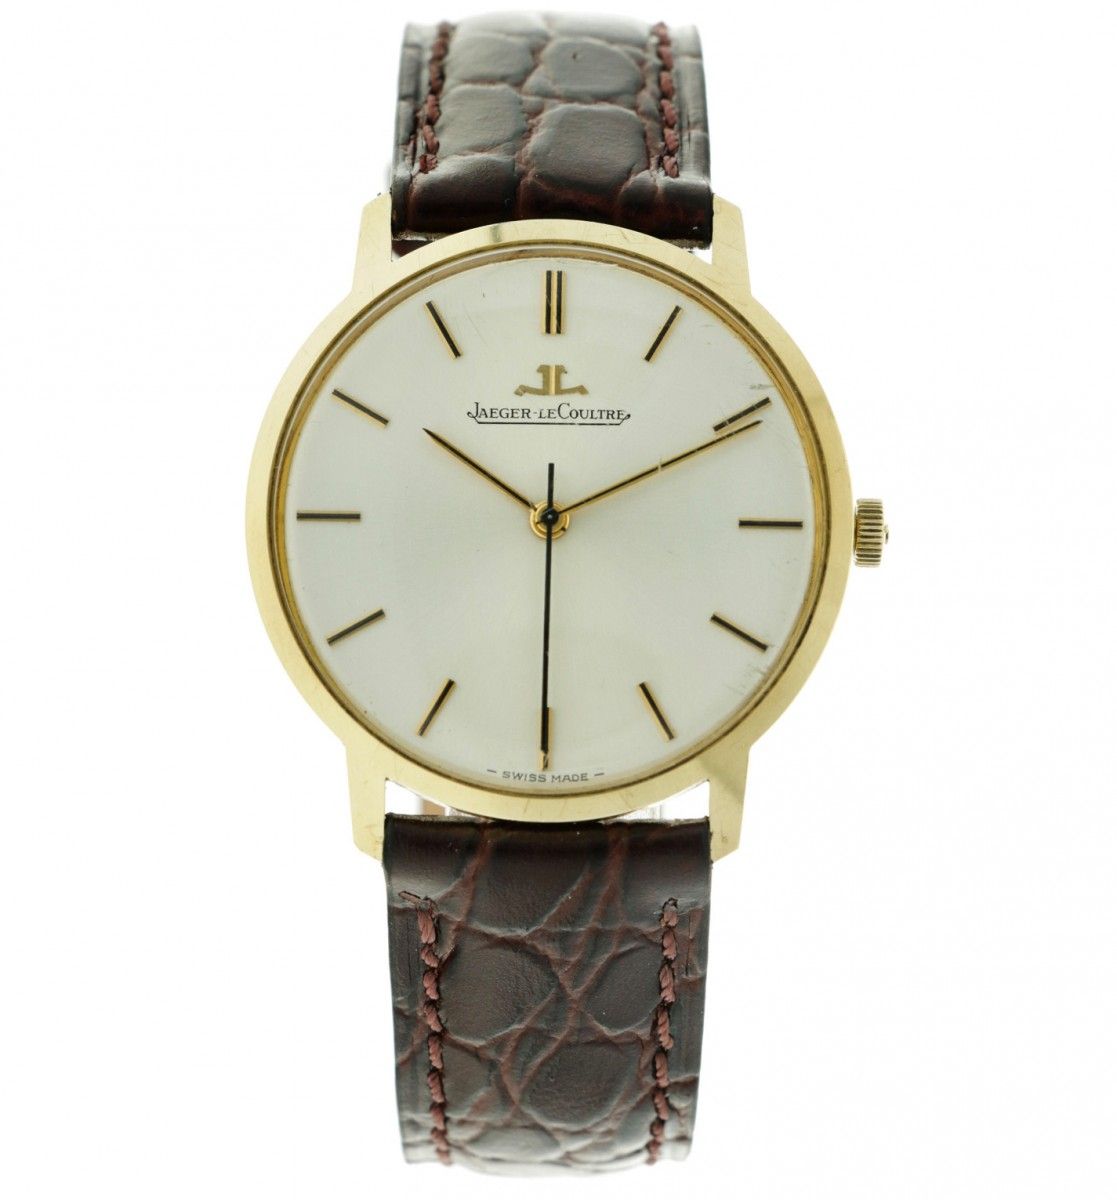 Jaeger-LeCoultre - Men's watch - apprx. 1970. Case: yellow gold (18 kt.) - strap&hellip;